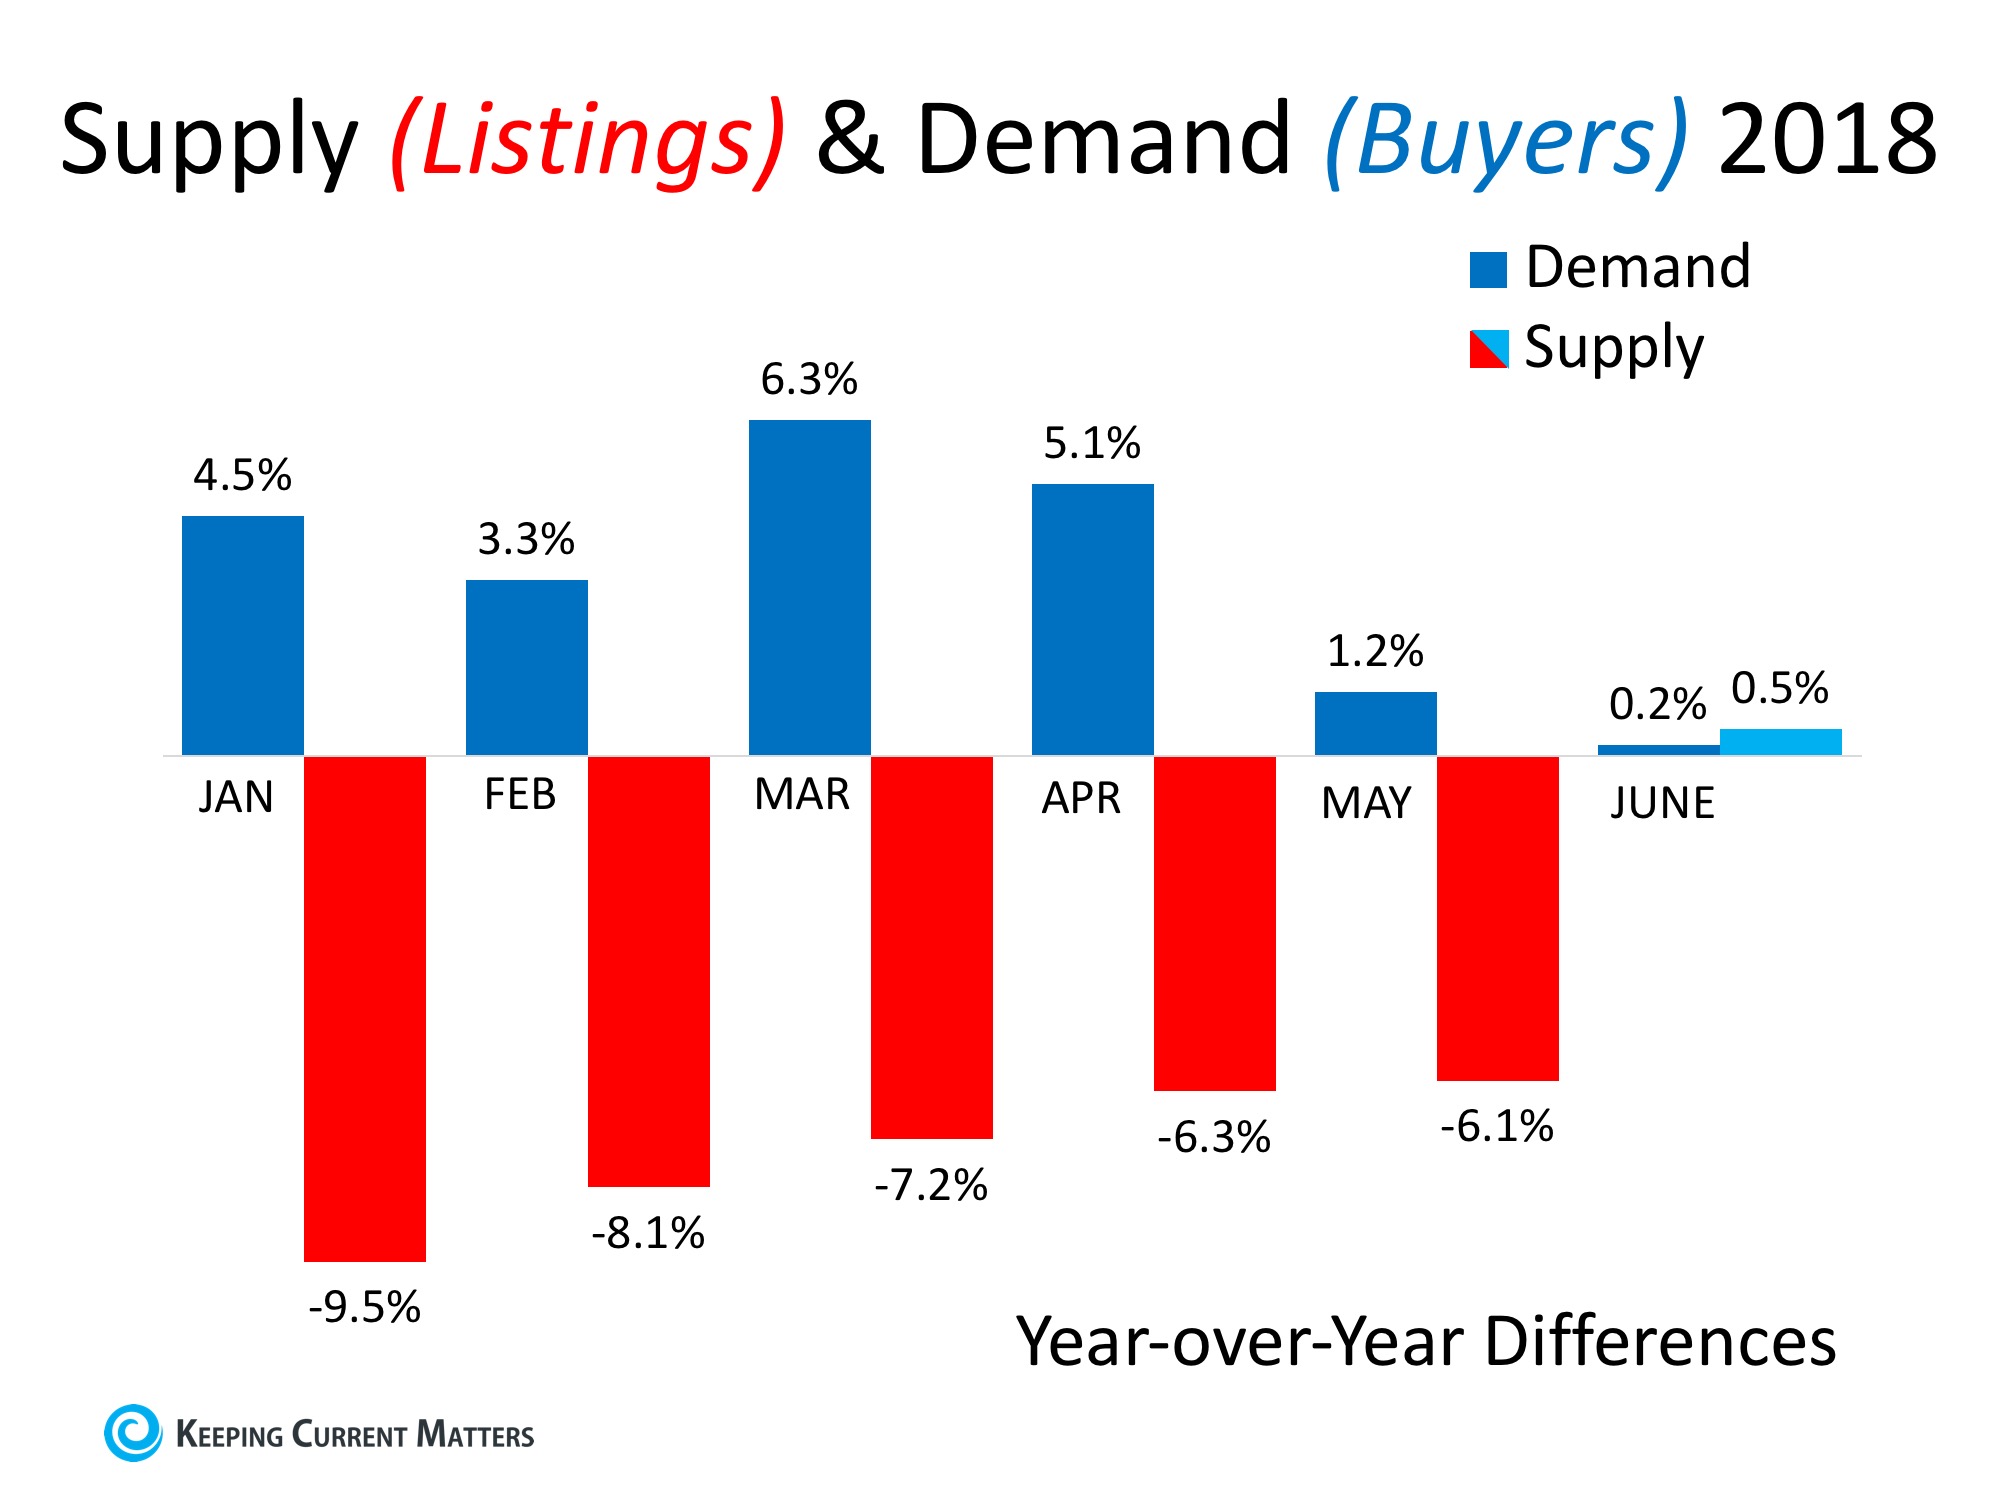 Supply & Demand - Buyers in 2018